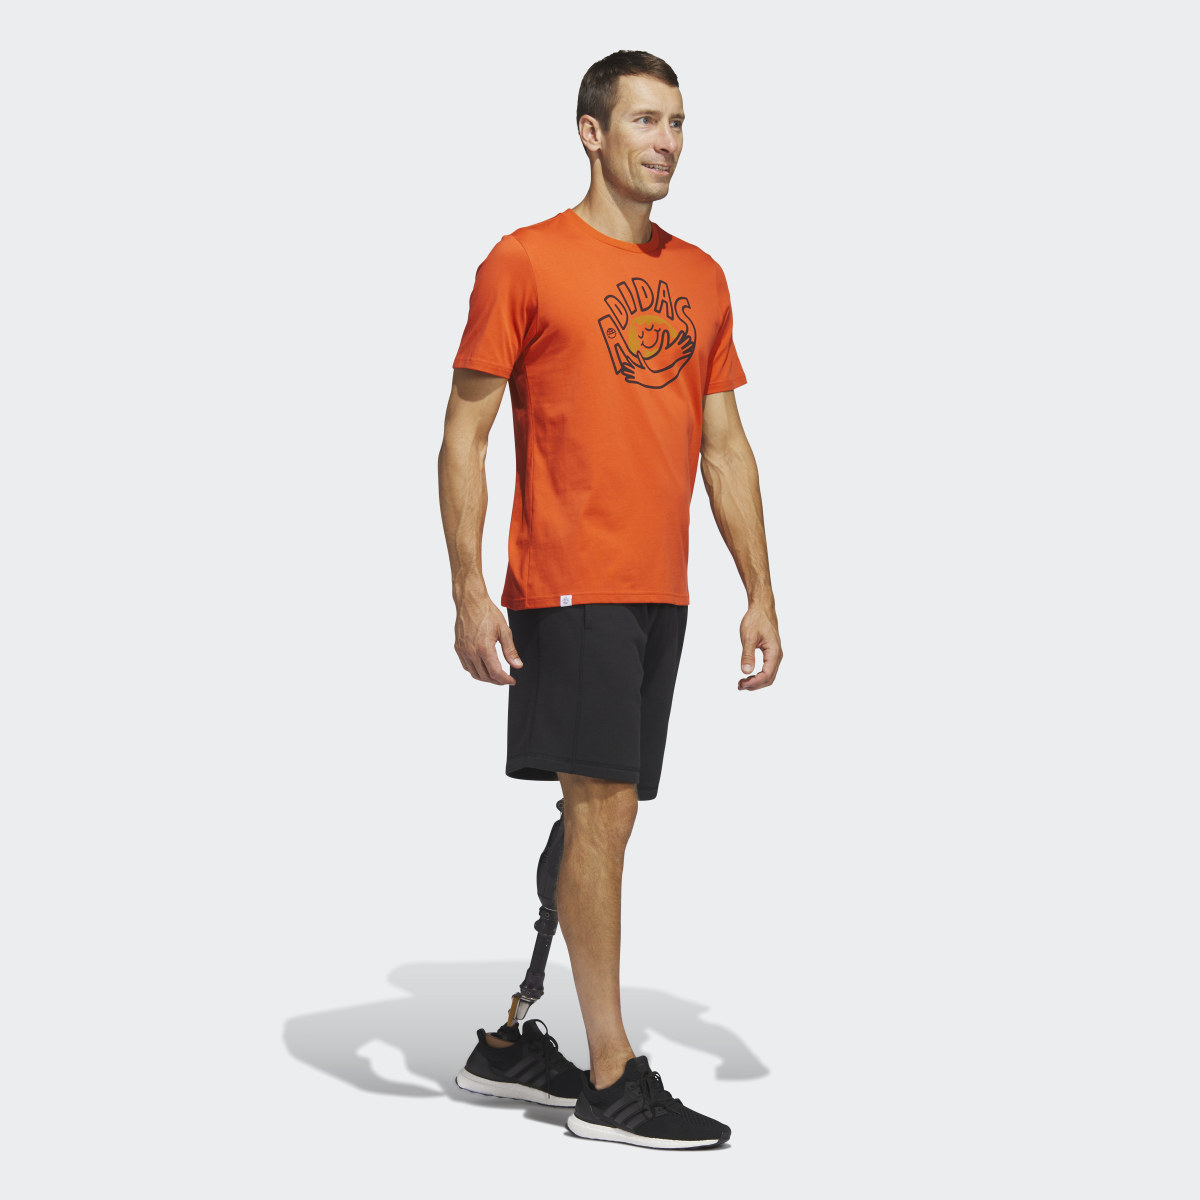 Adidas Change Through Sports Earth Graphic T-Shirt. 4